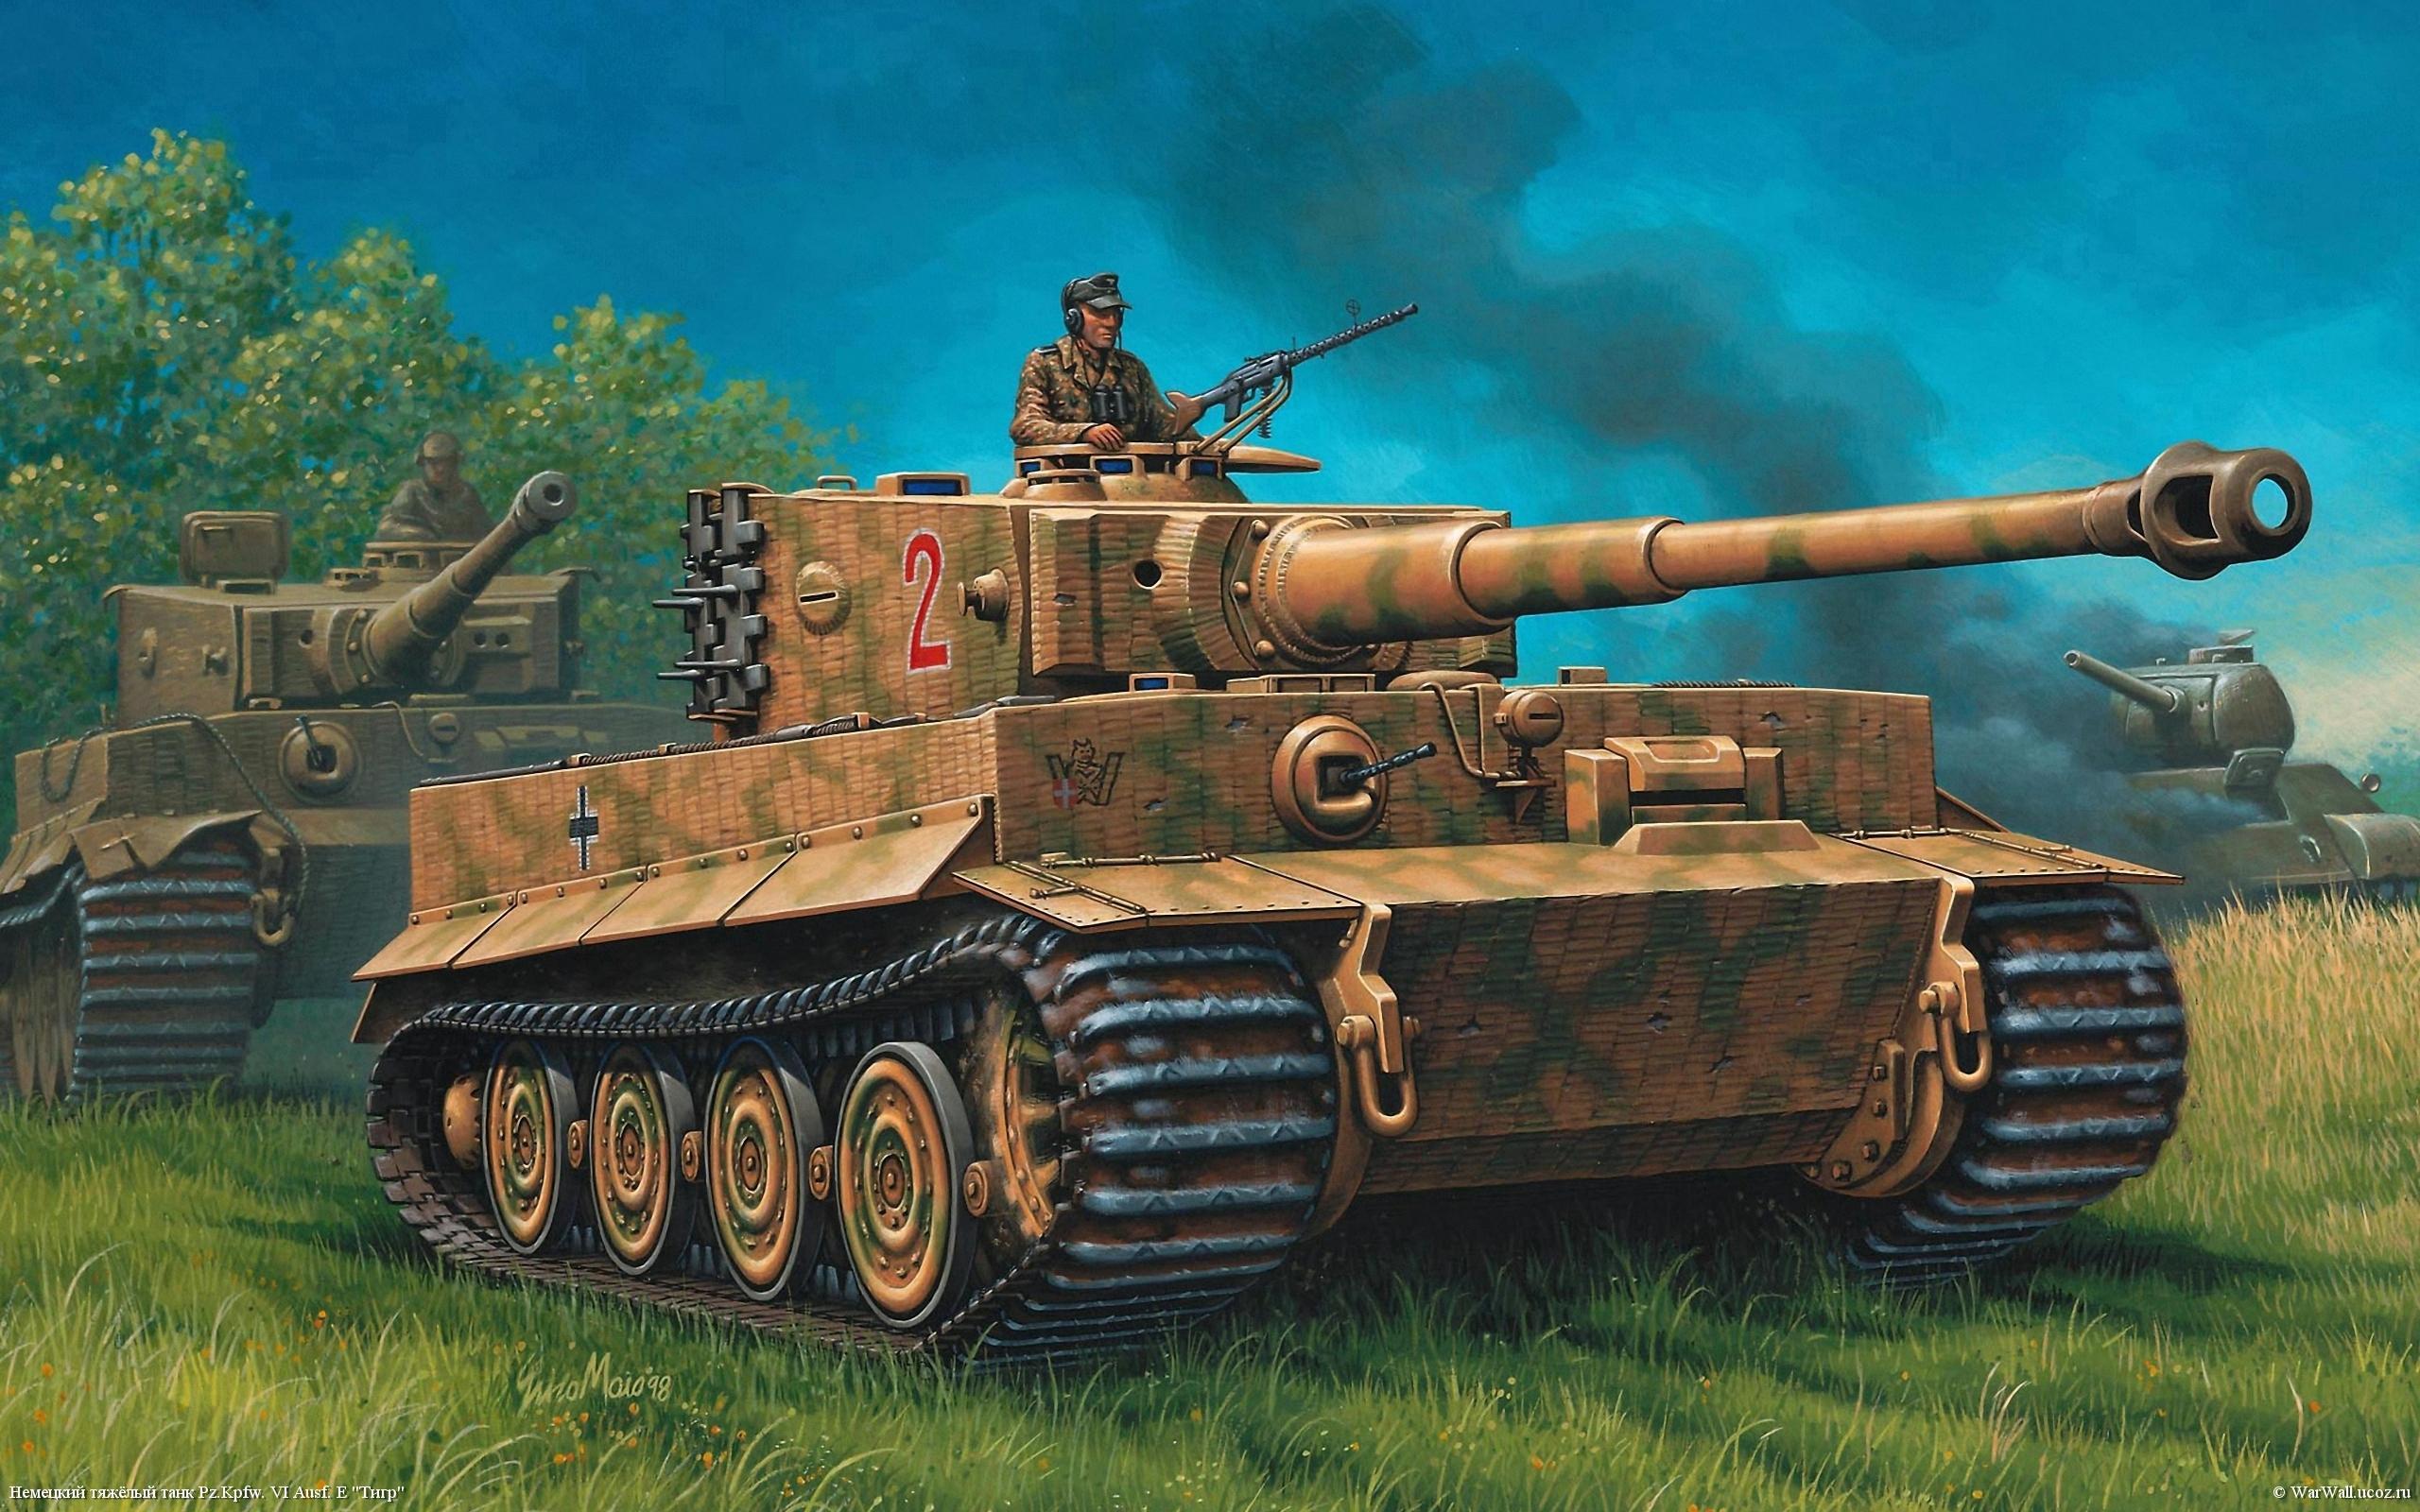 Tank tiger war drawing wallpaper   ForWallpapercom